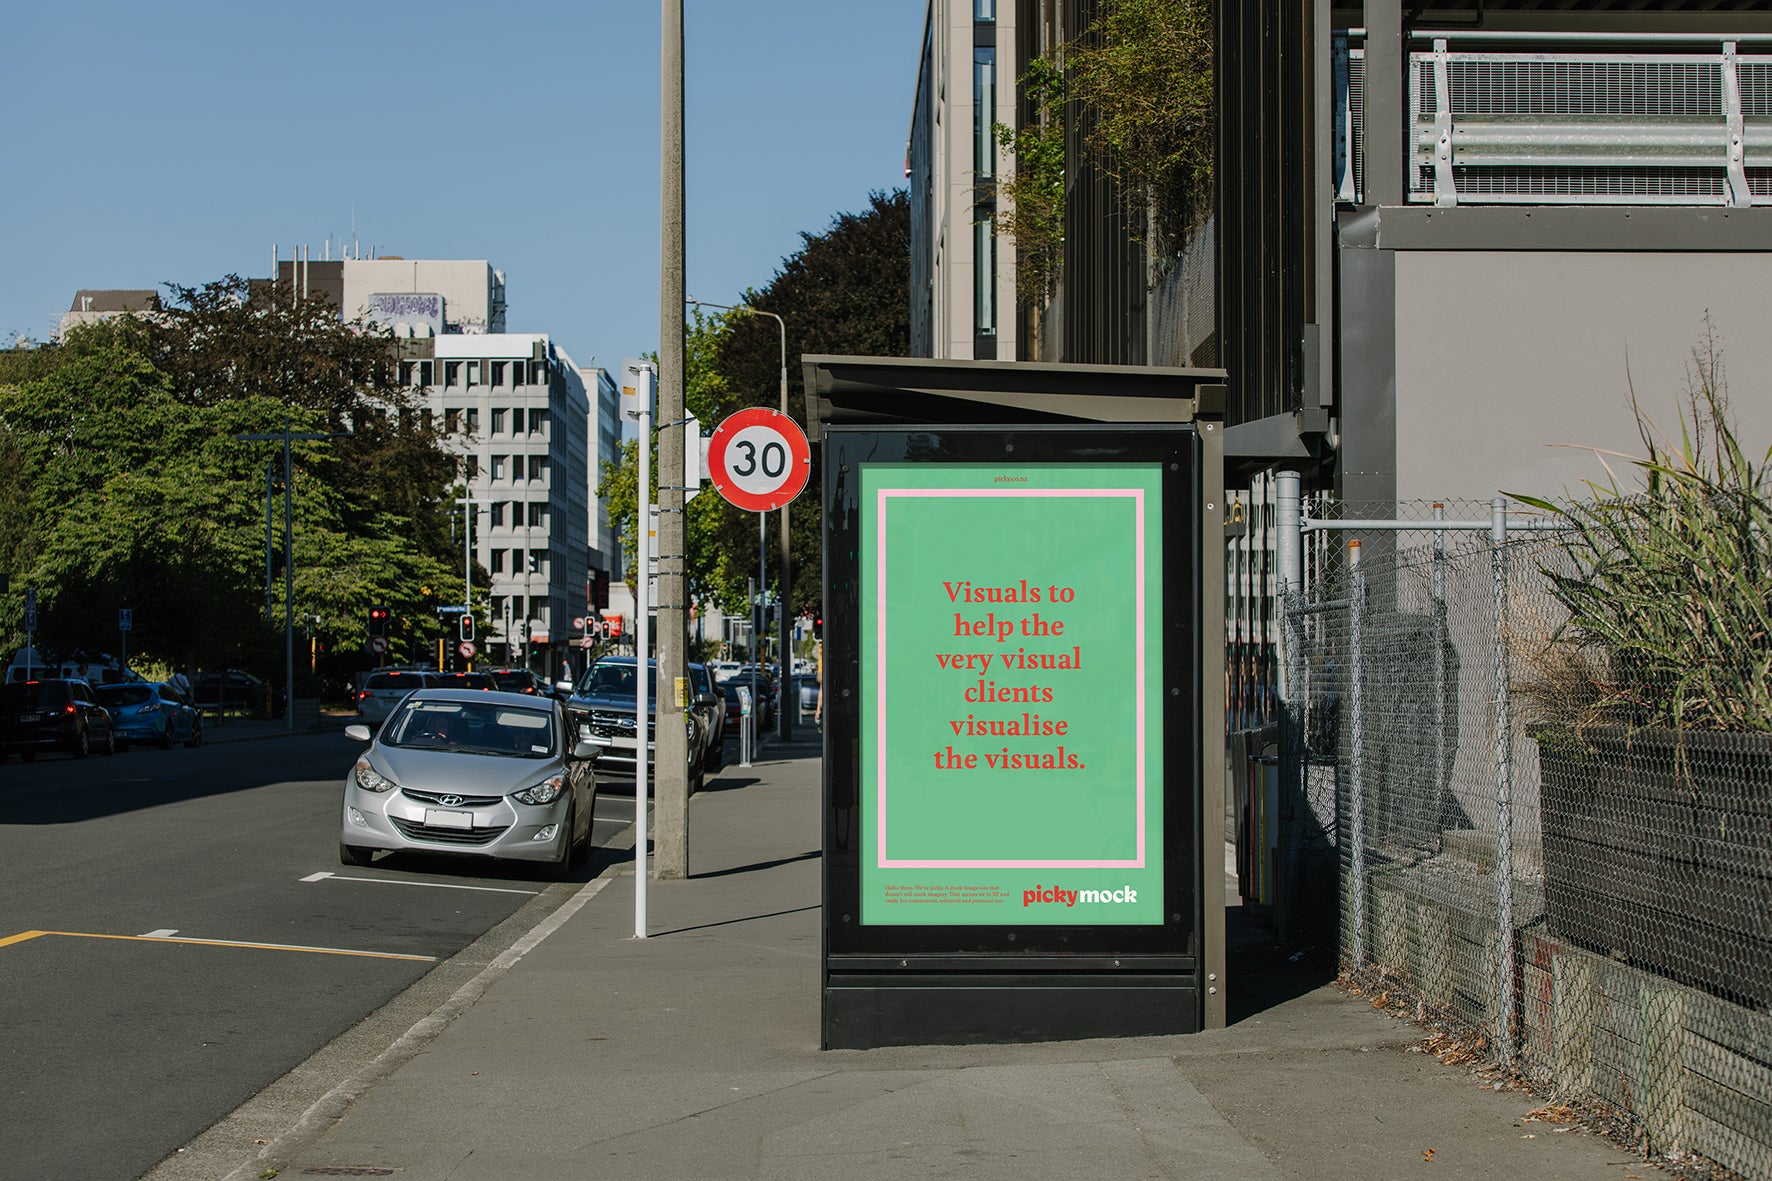 Bus stop advertising on a calm urban street.